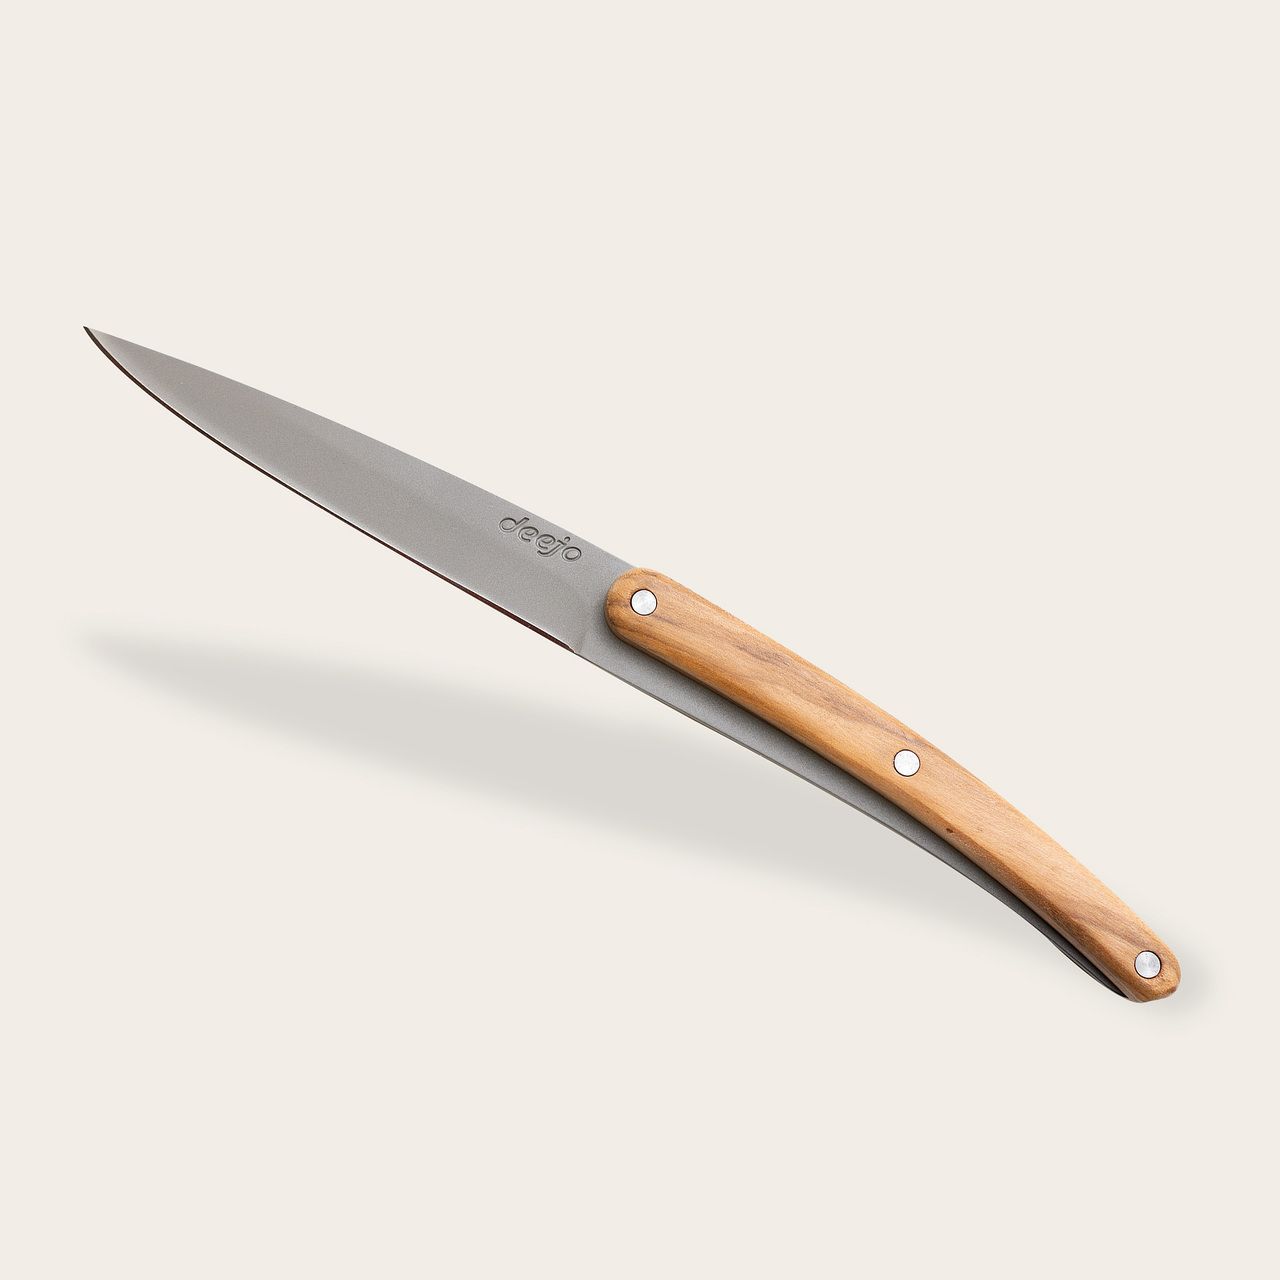 https://www.deejo.com/medias/produits/2446149805/22388_1280-2-deejo-paring-knives-olive-and-coral-wood.jpg